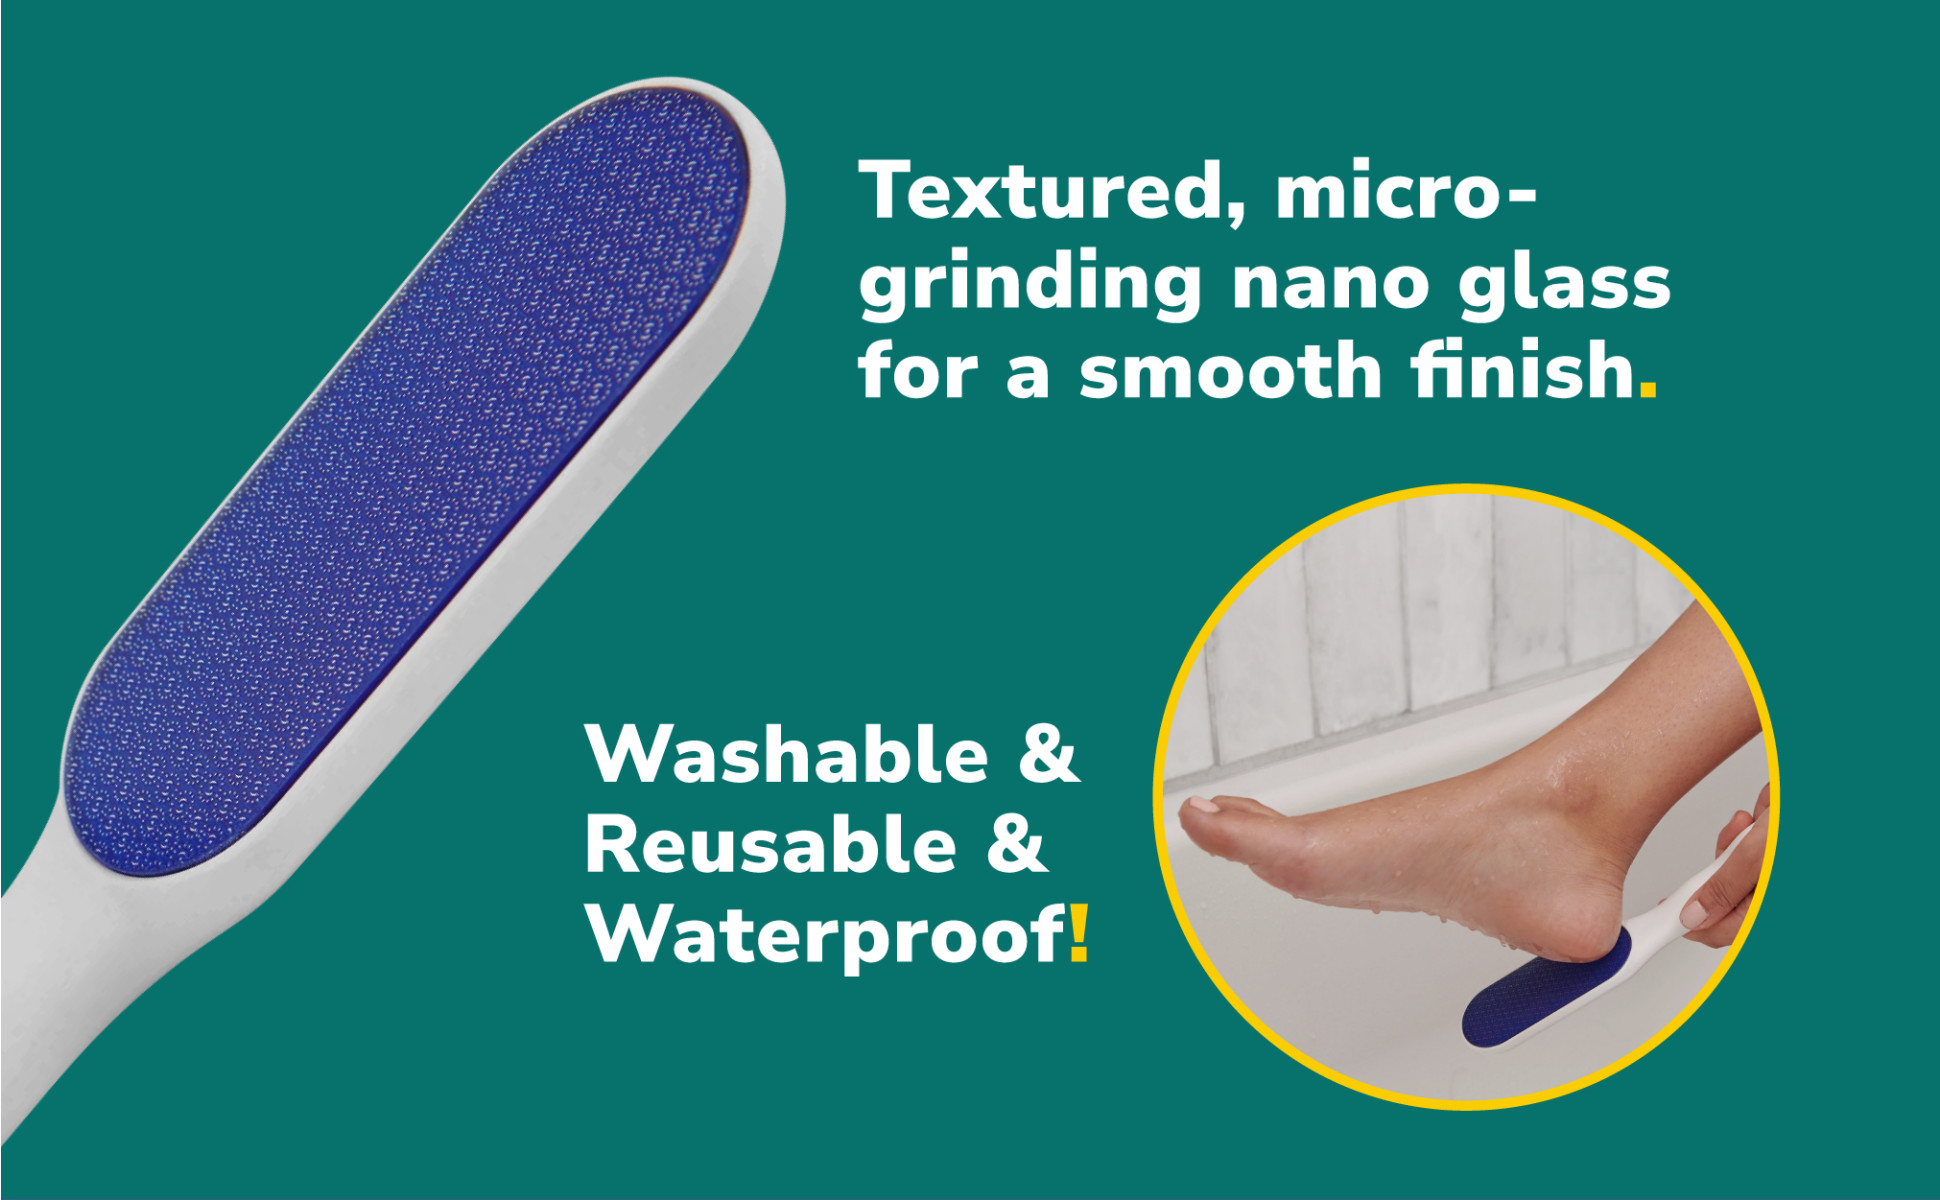 Dr. Scholl's Hard Skin Remover Nano Glass Foot File